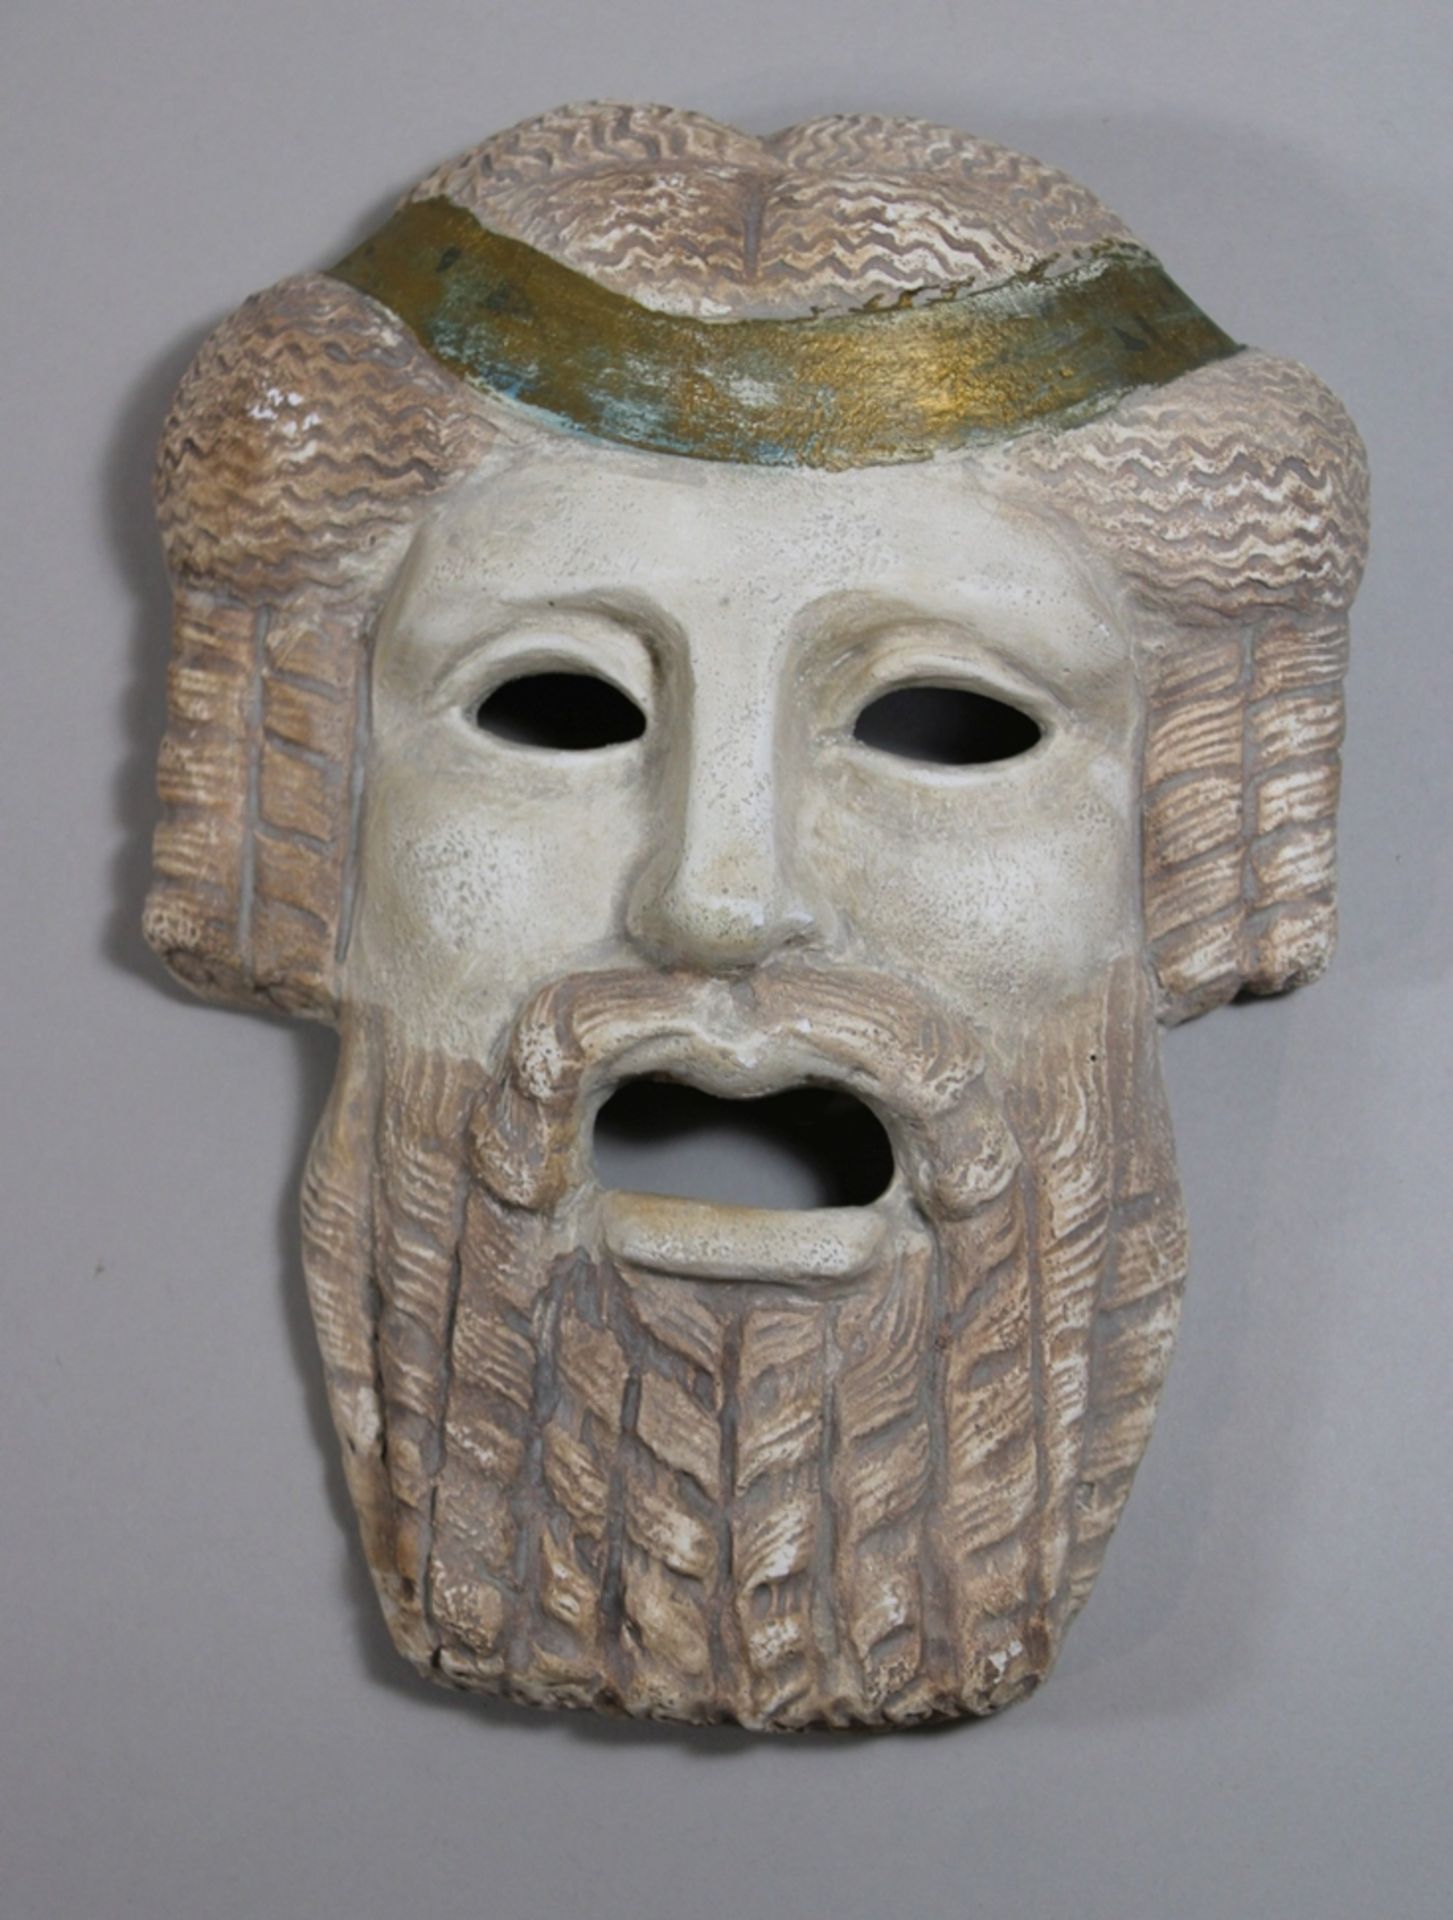 Griechische Theatermasken 4 Tl., Keramik, Griechenland, 20. Jh., H.: 27 cm. Guter, altersbedingter - Image 6 of 7